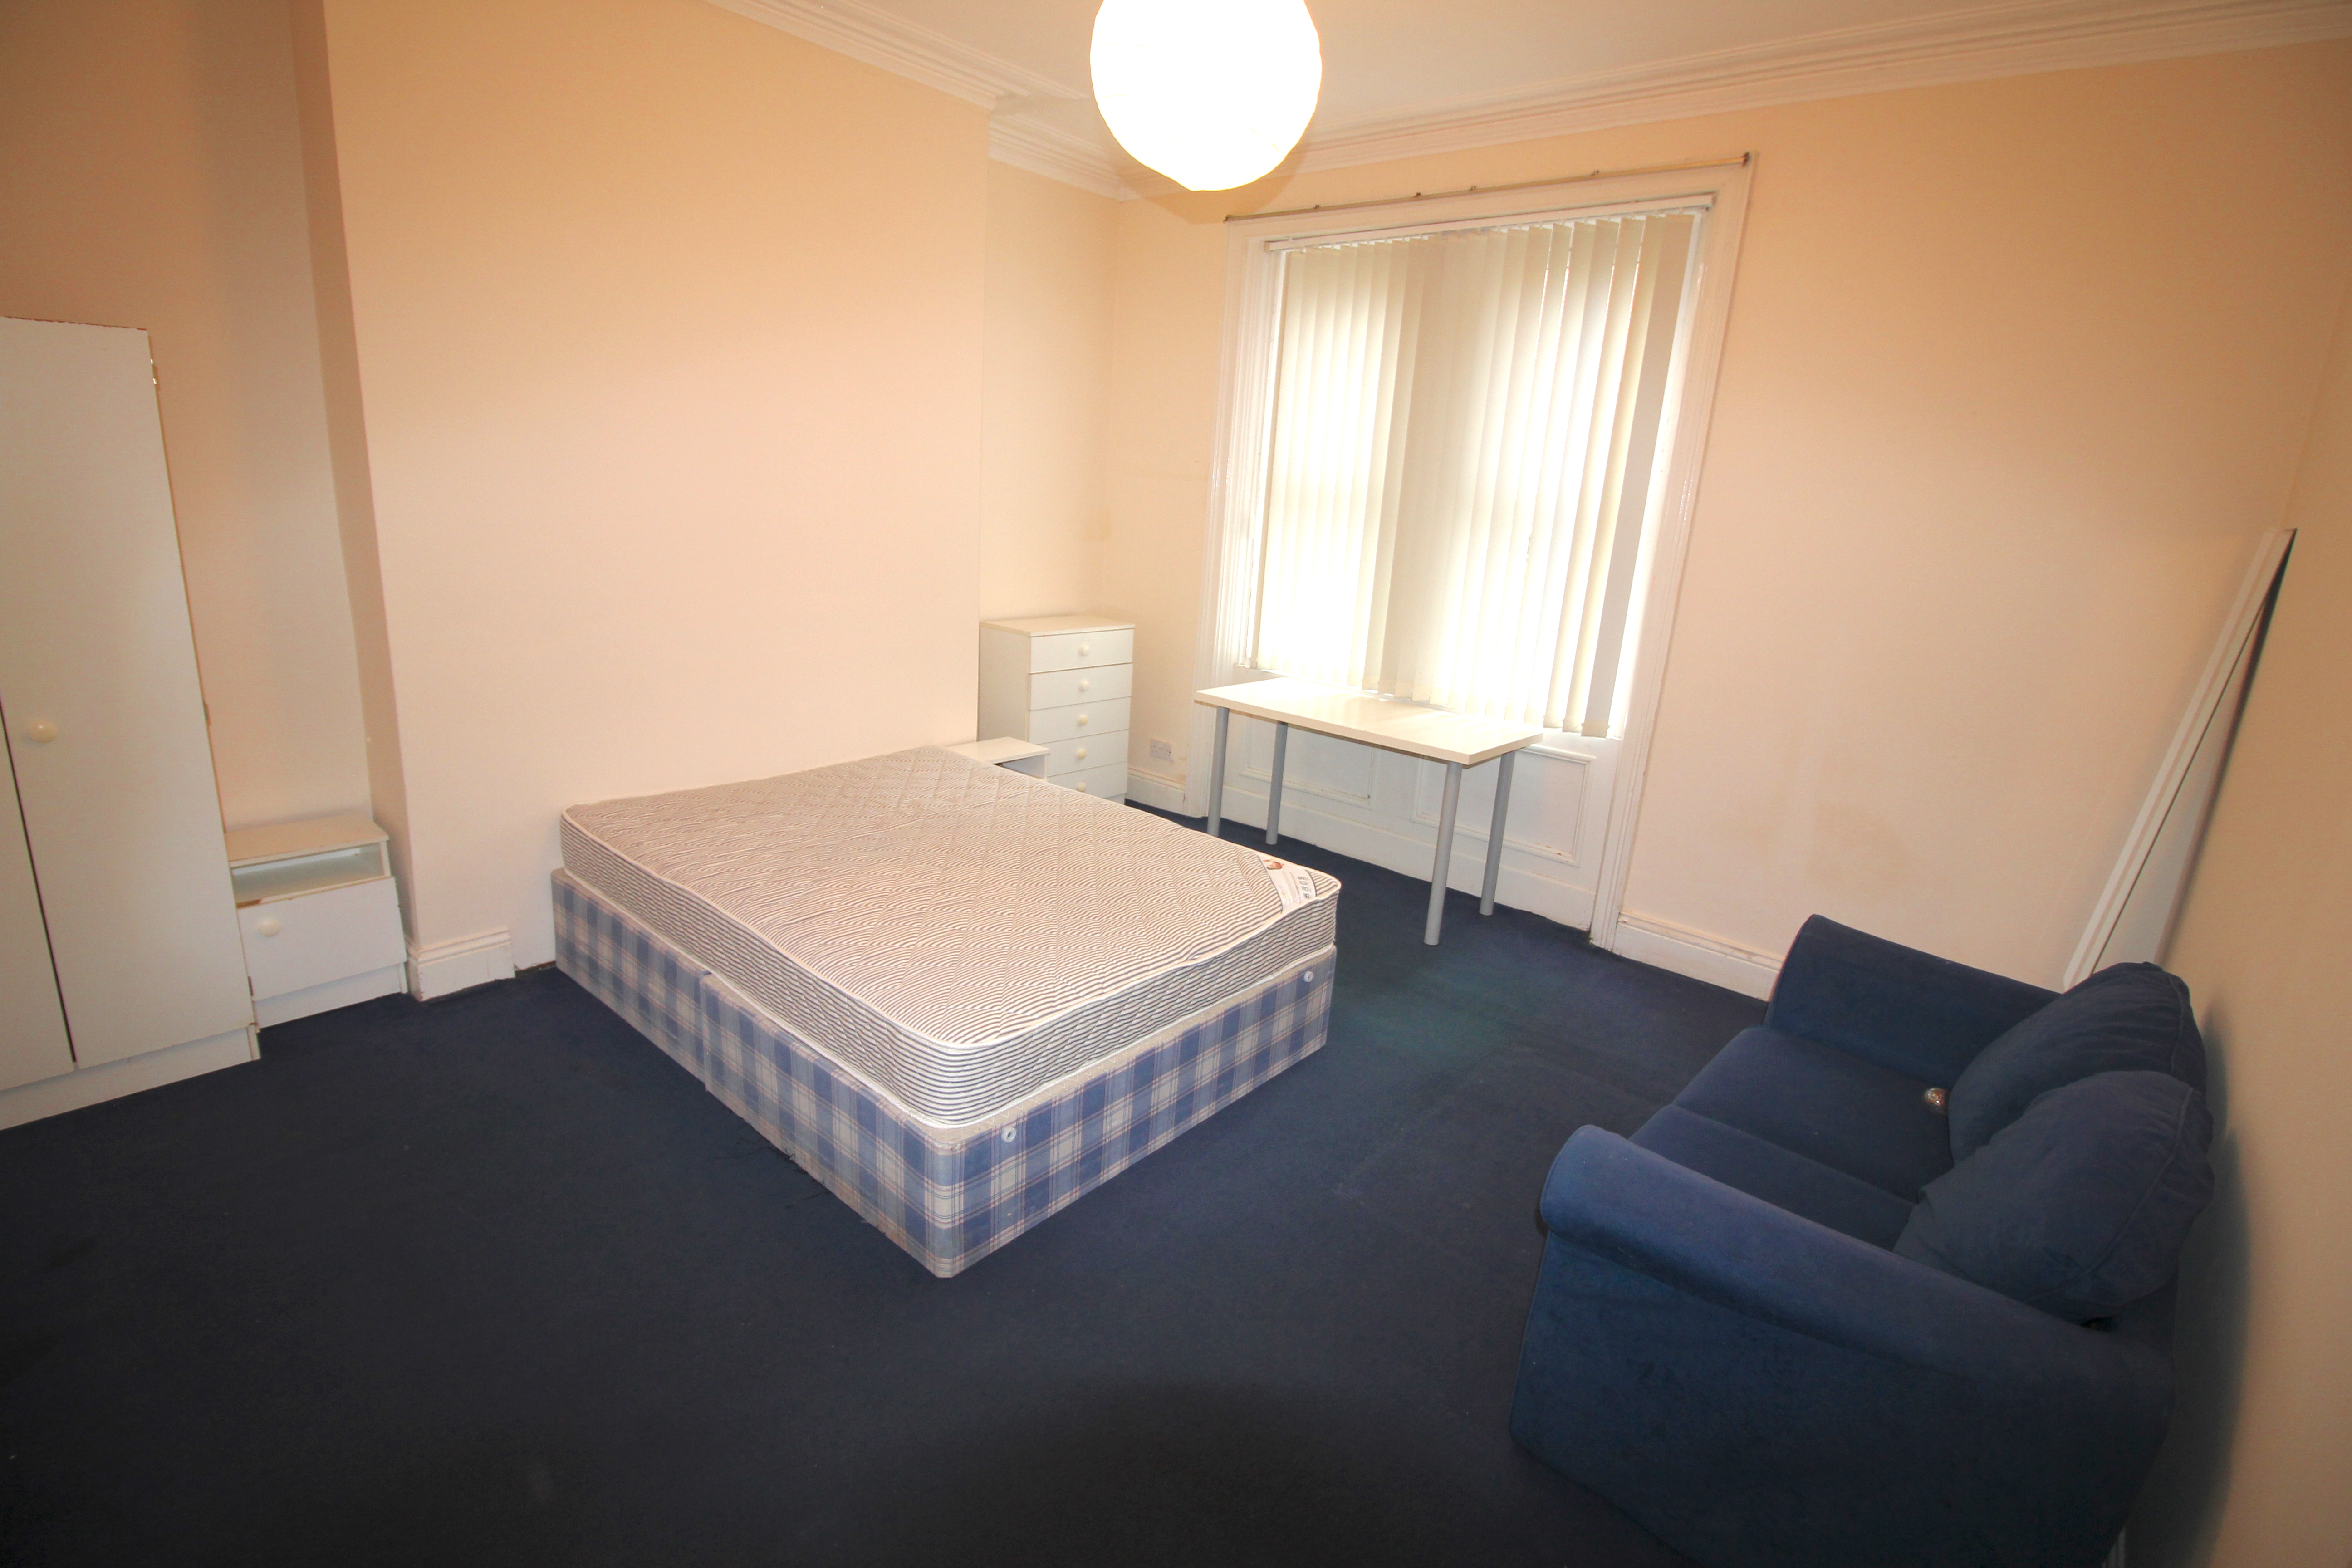 8 Bed, Osborne Road NE2 £135.00PPPW